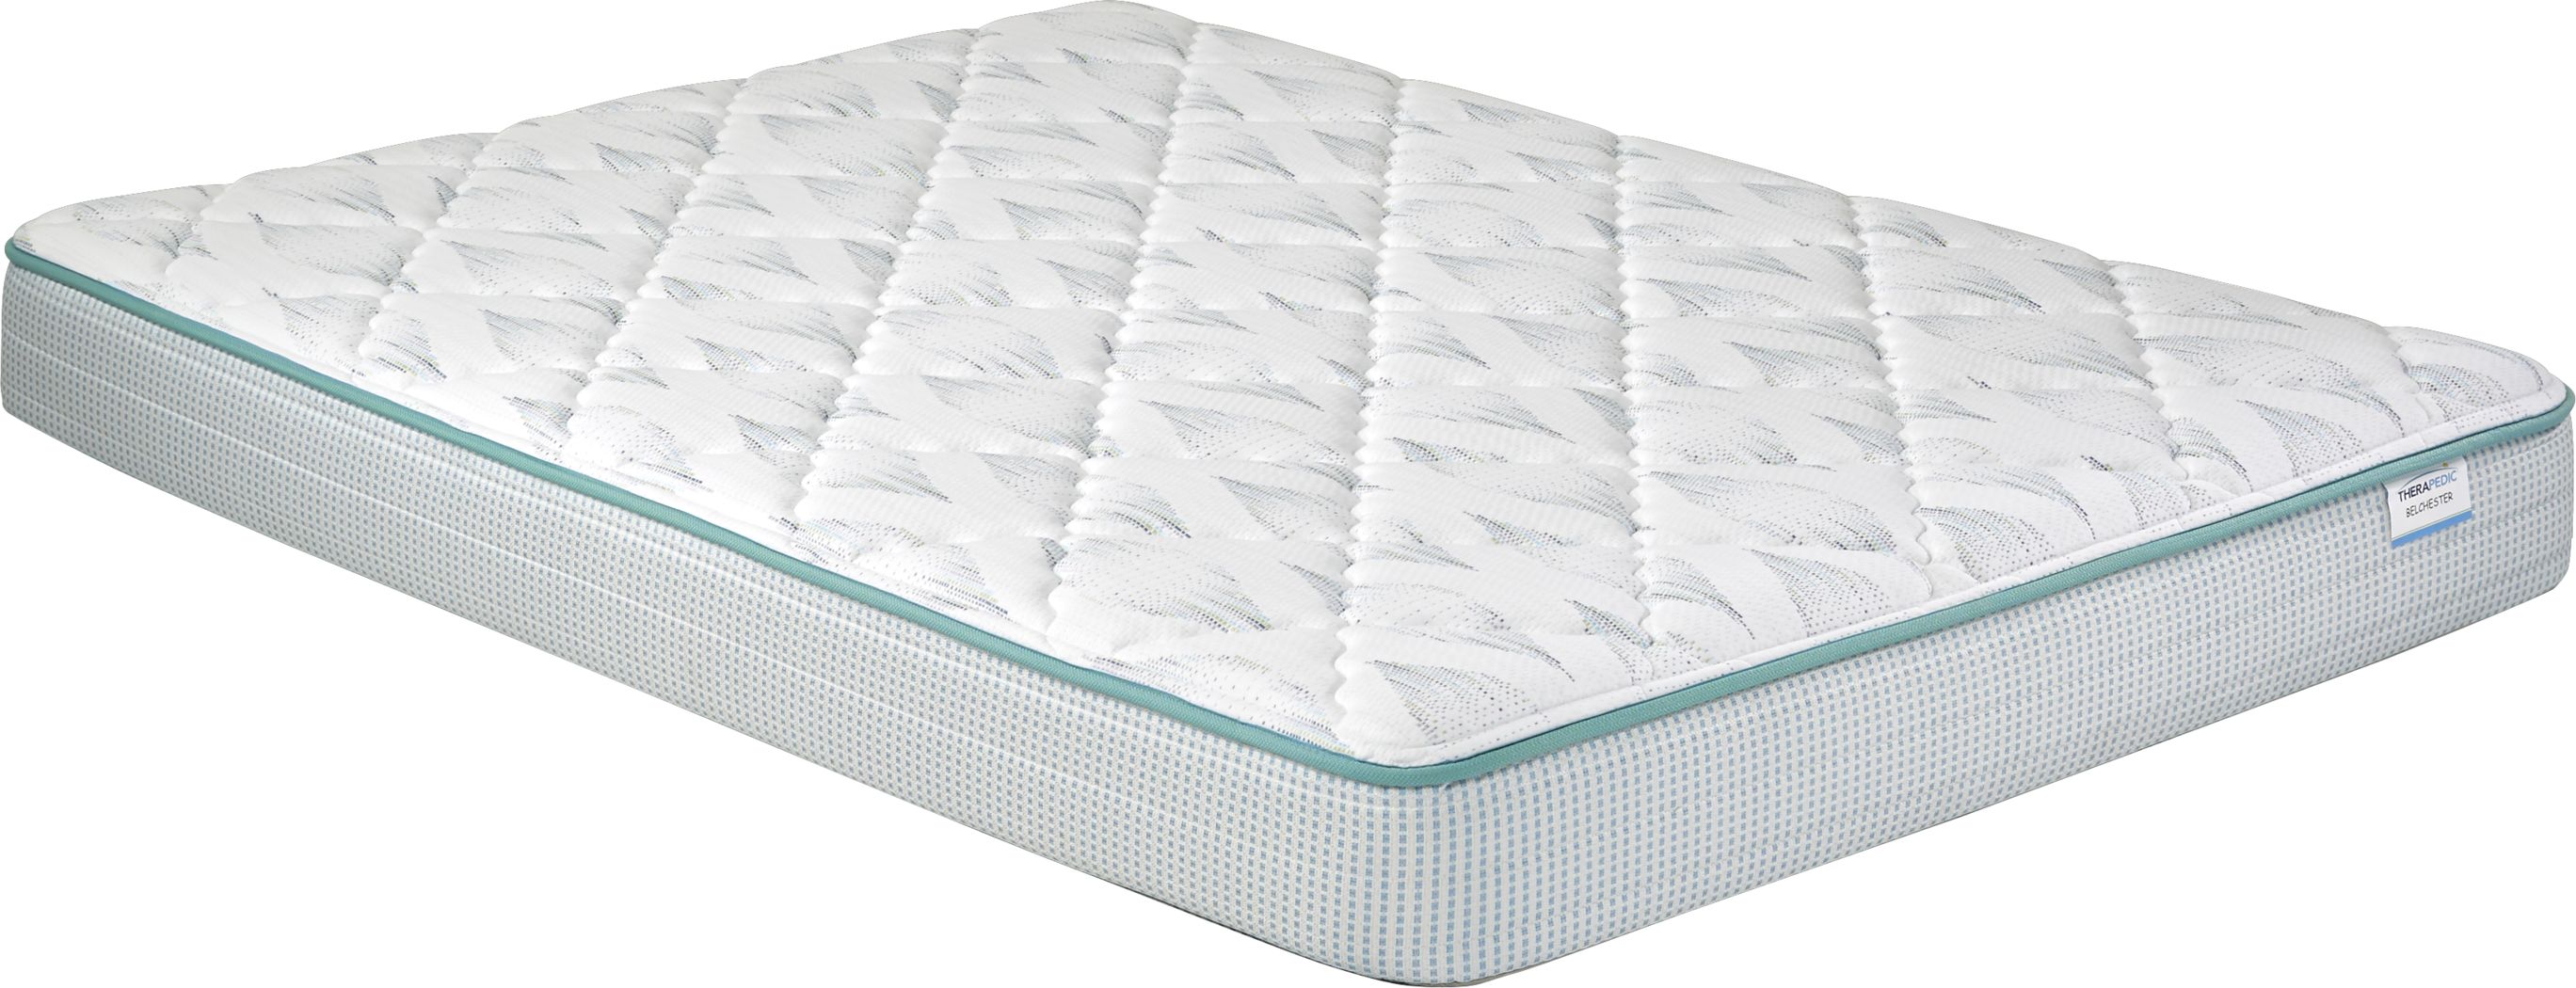 therapedic albie full mattress